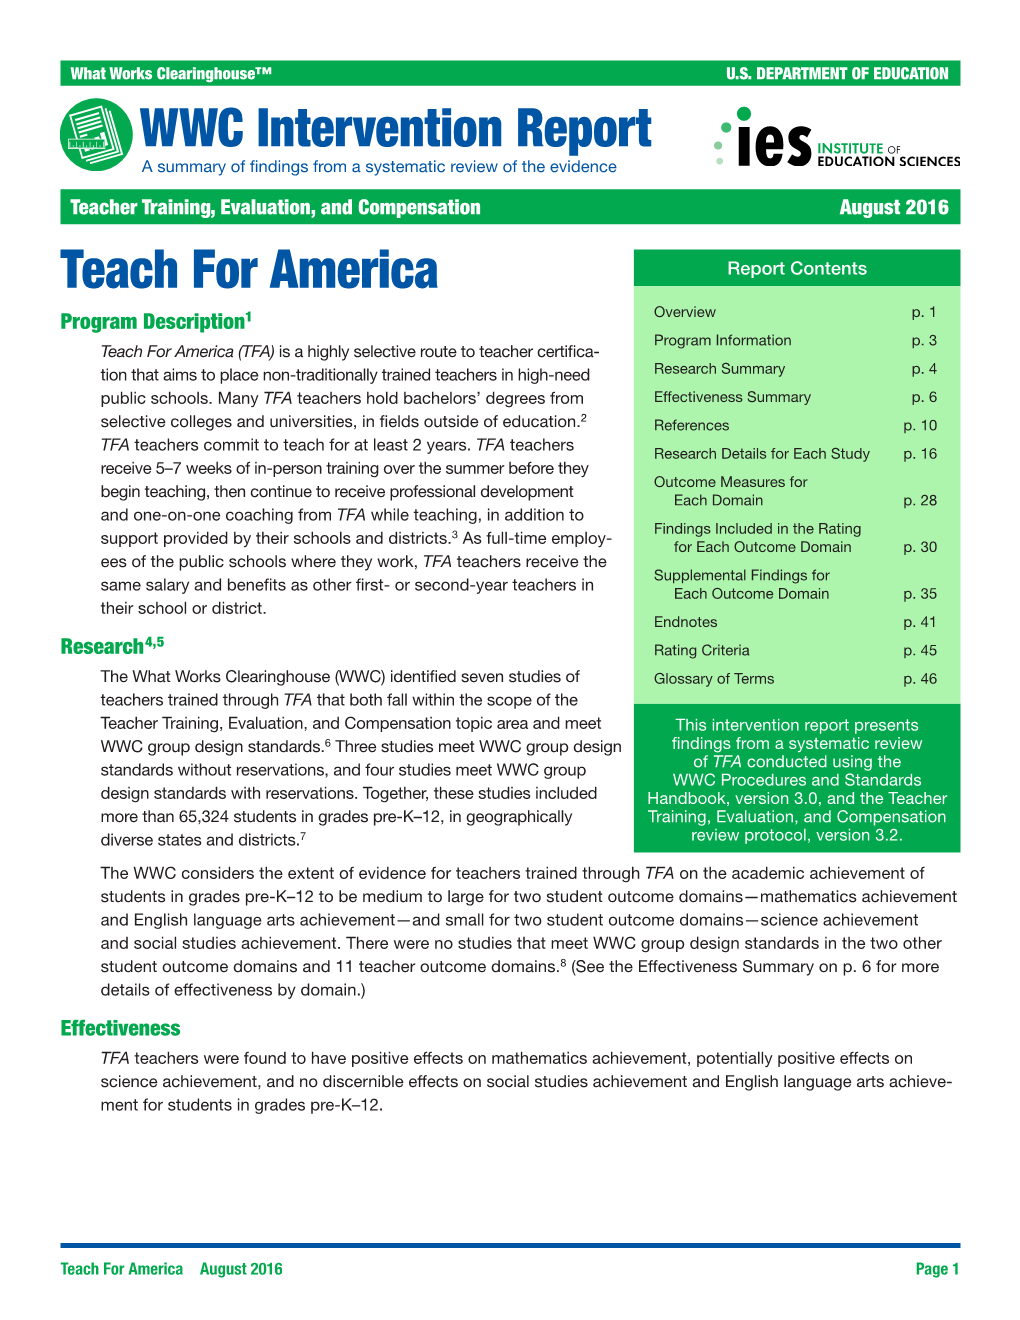 Teach for America Report Contents Program Description1 Overview P